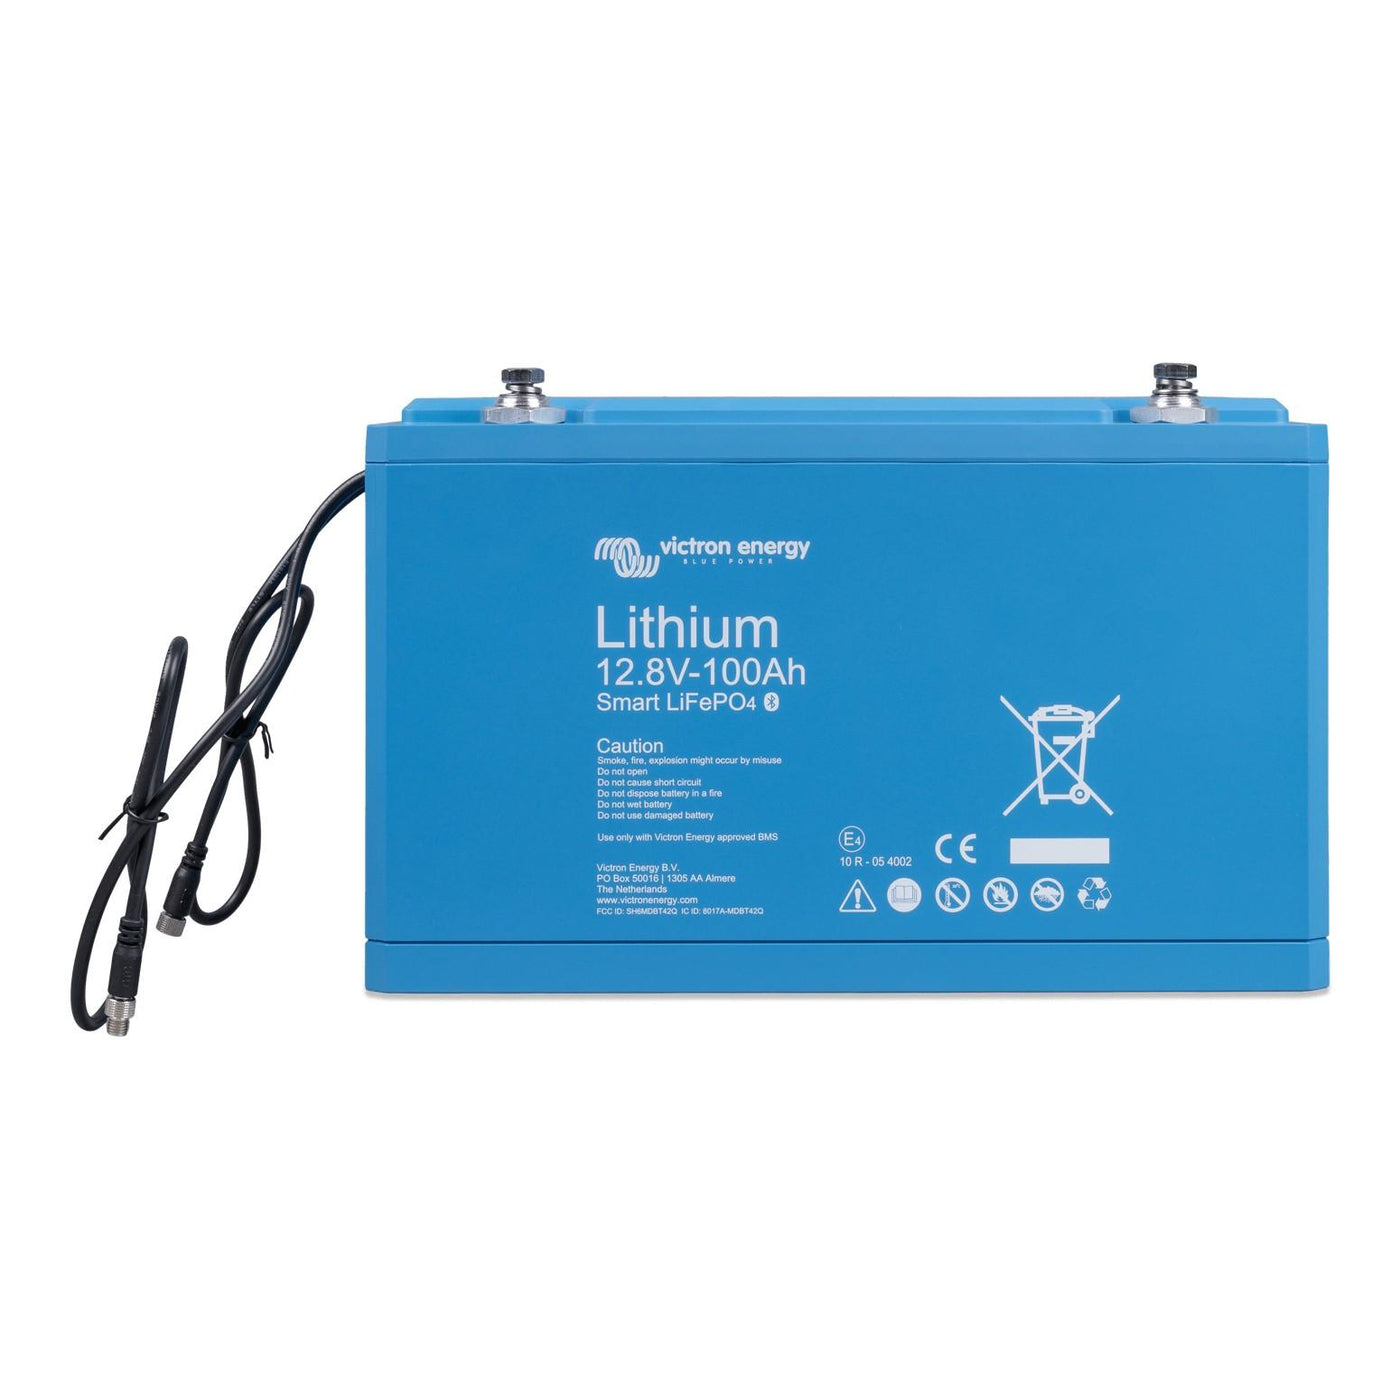 Victron Energy BAT512110610 100AH 12.8V Smart LifePO4 Lithium Bluetooth Battery